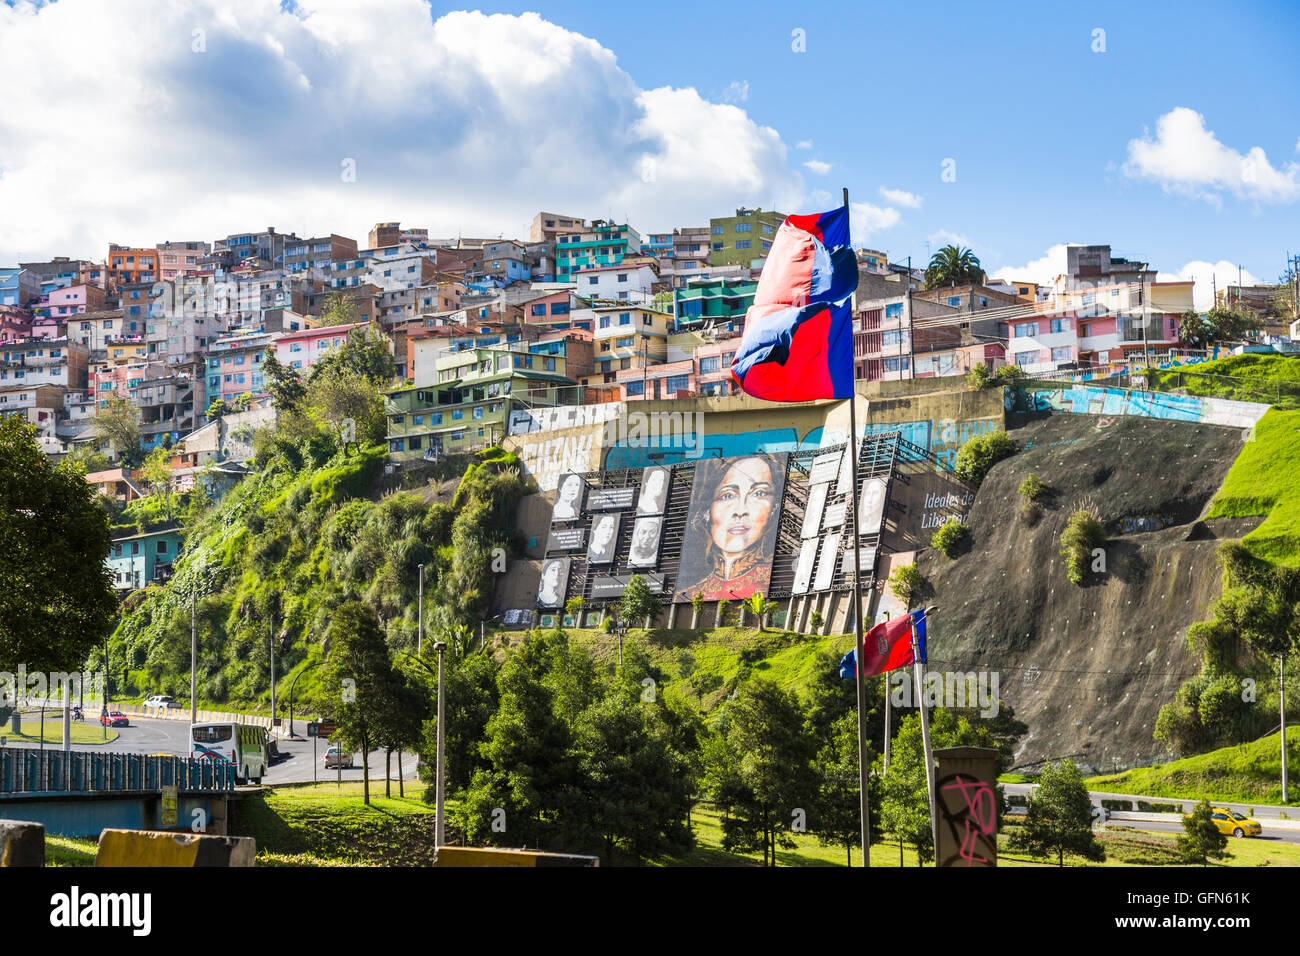 Portraits of local Ecuadorian women and ideas of liberty and colourful hillside houses, Quito, capital city of Ecuador, South America Stock Photo